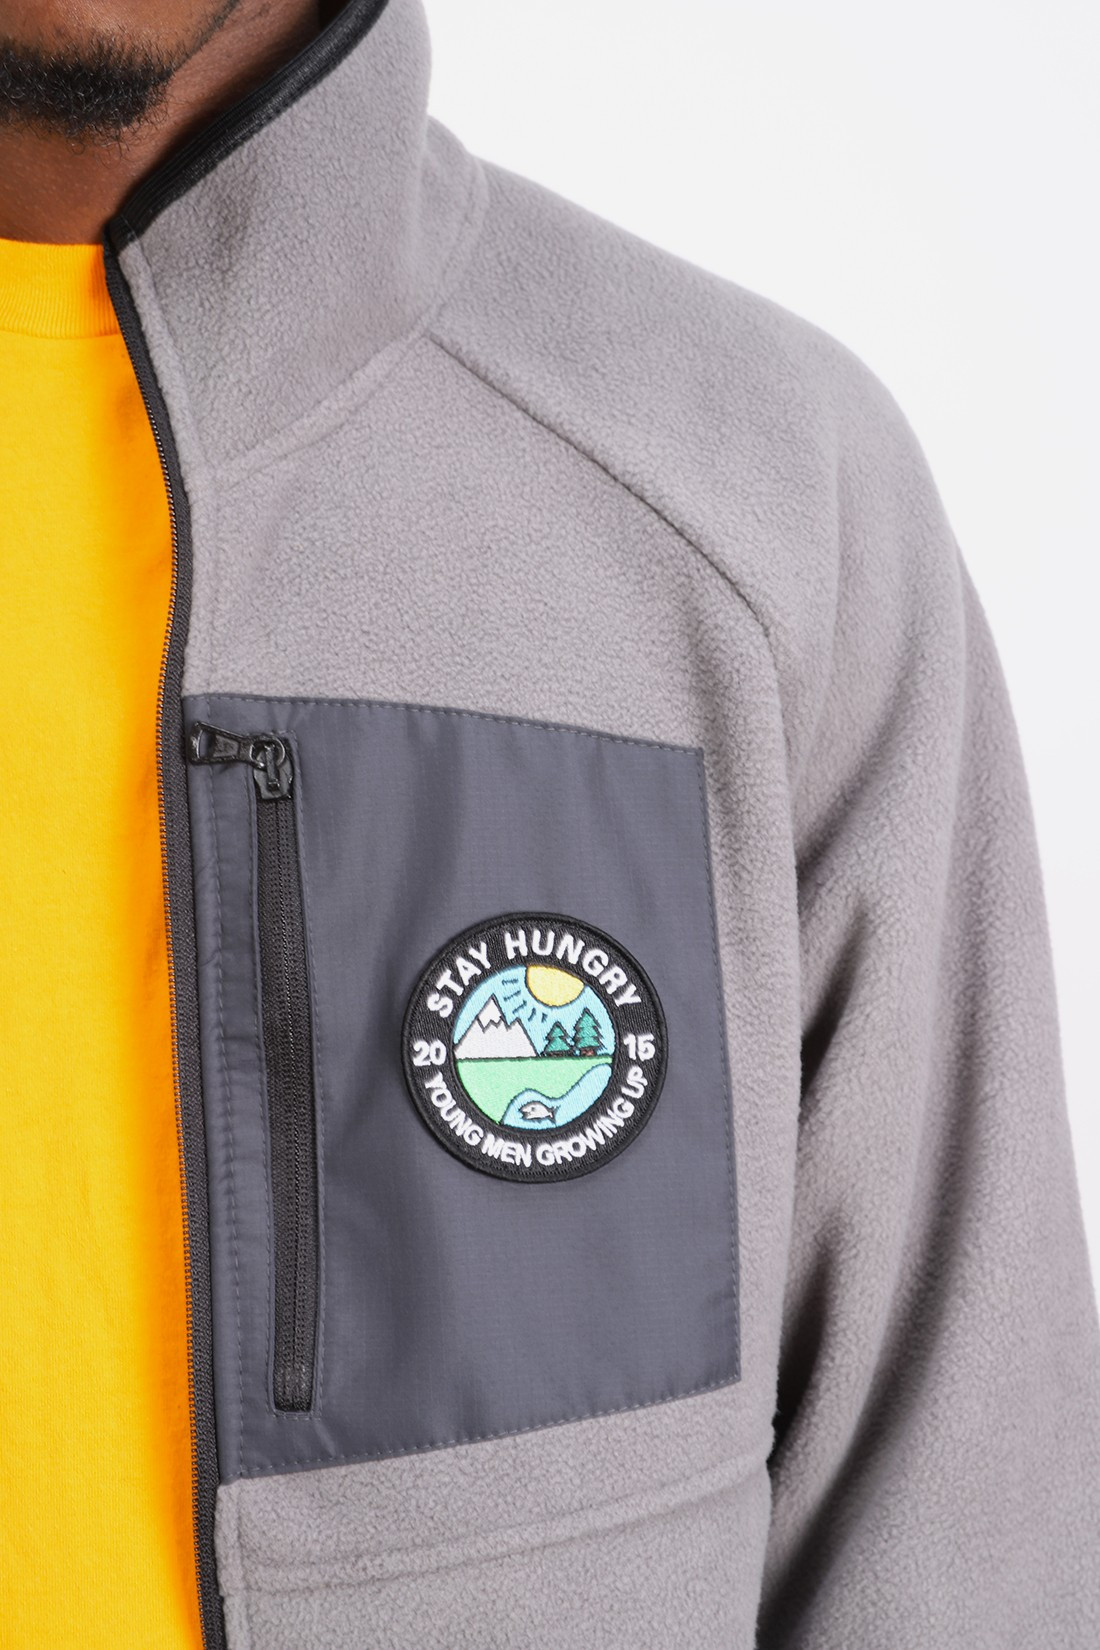 STAY HUNGRY SPORTS / Ymgu fleece jacket Grey/yellow